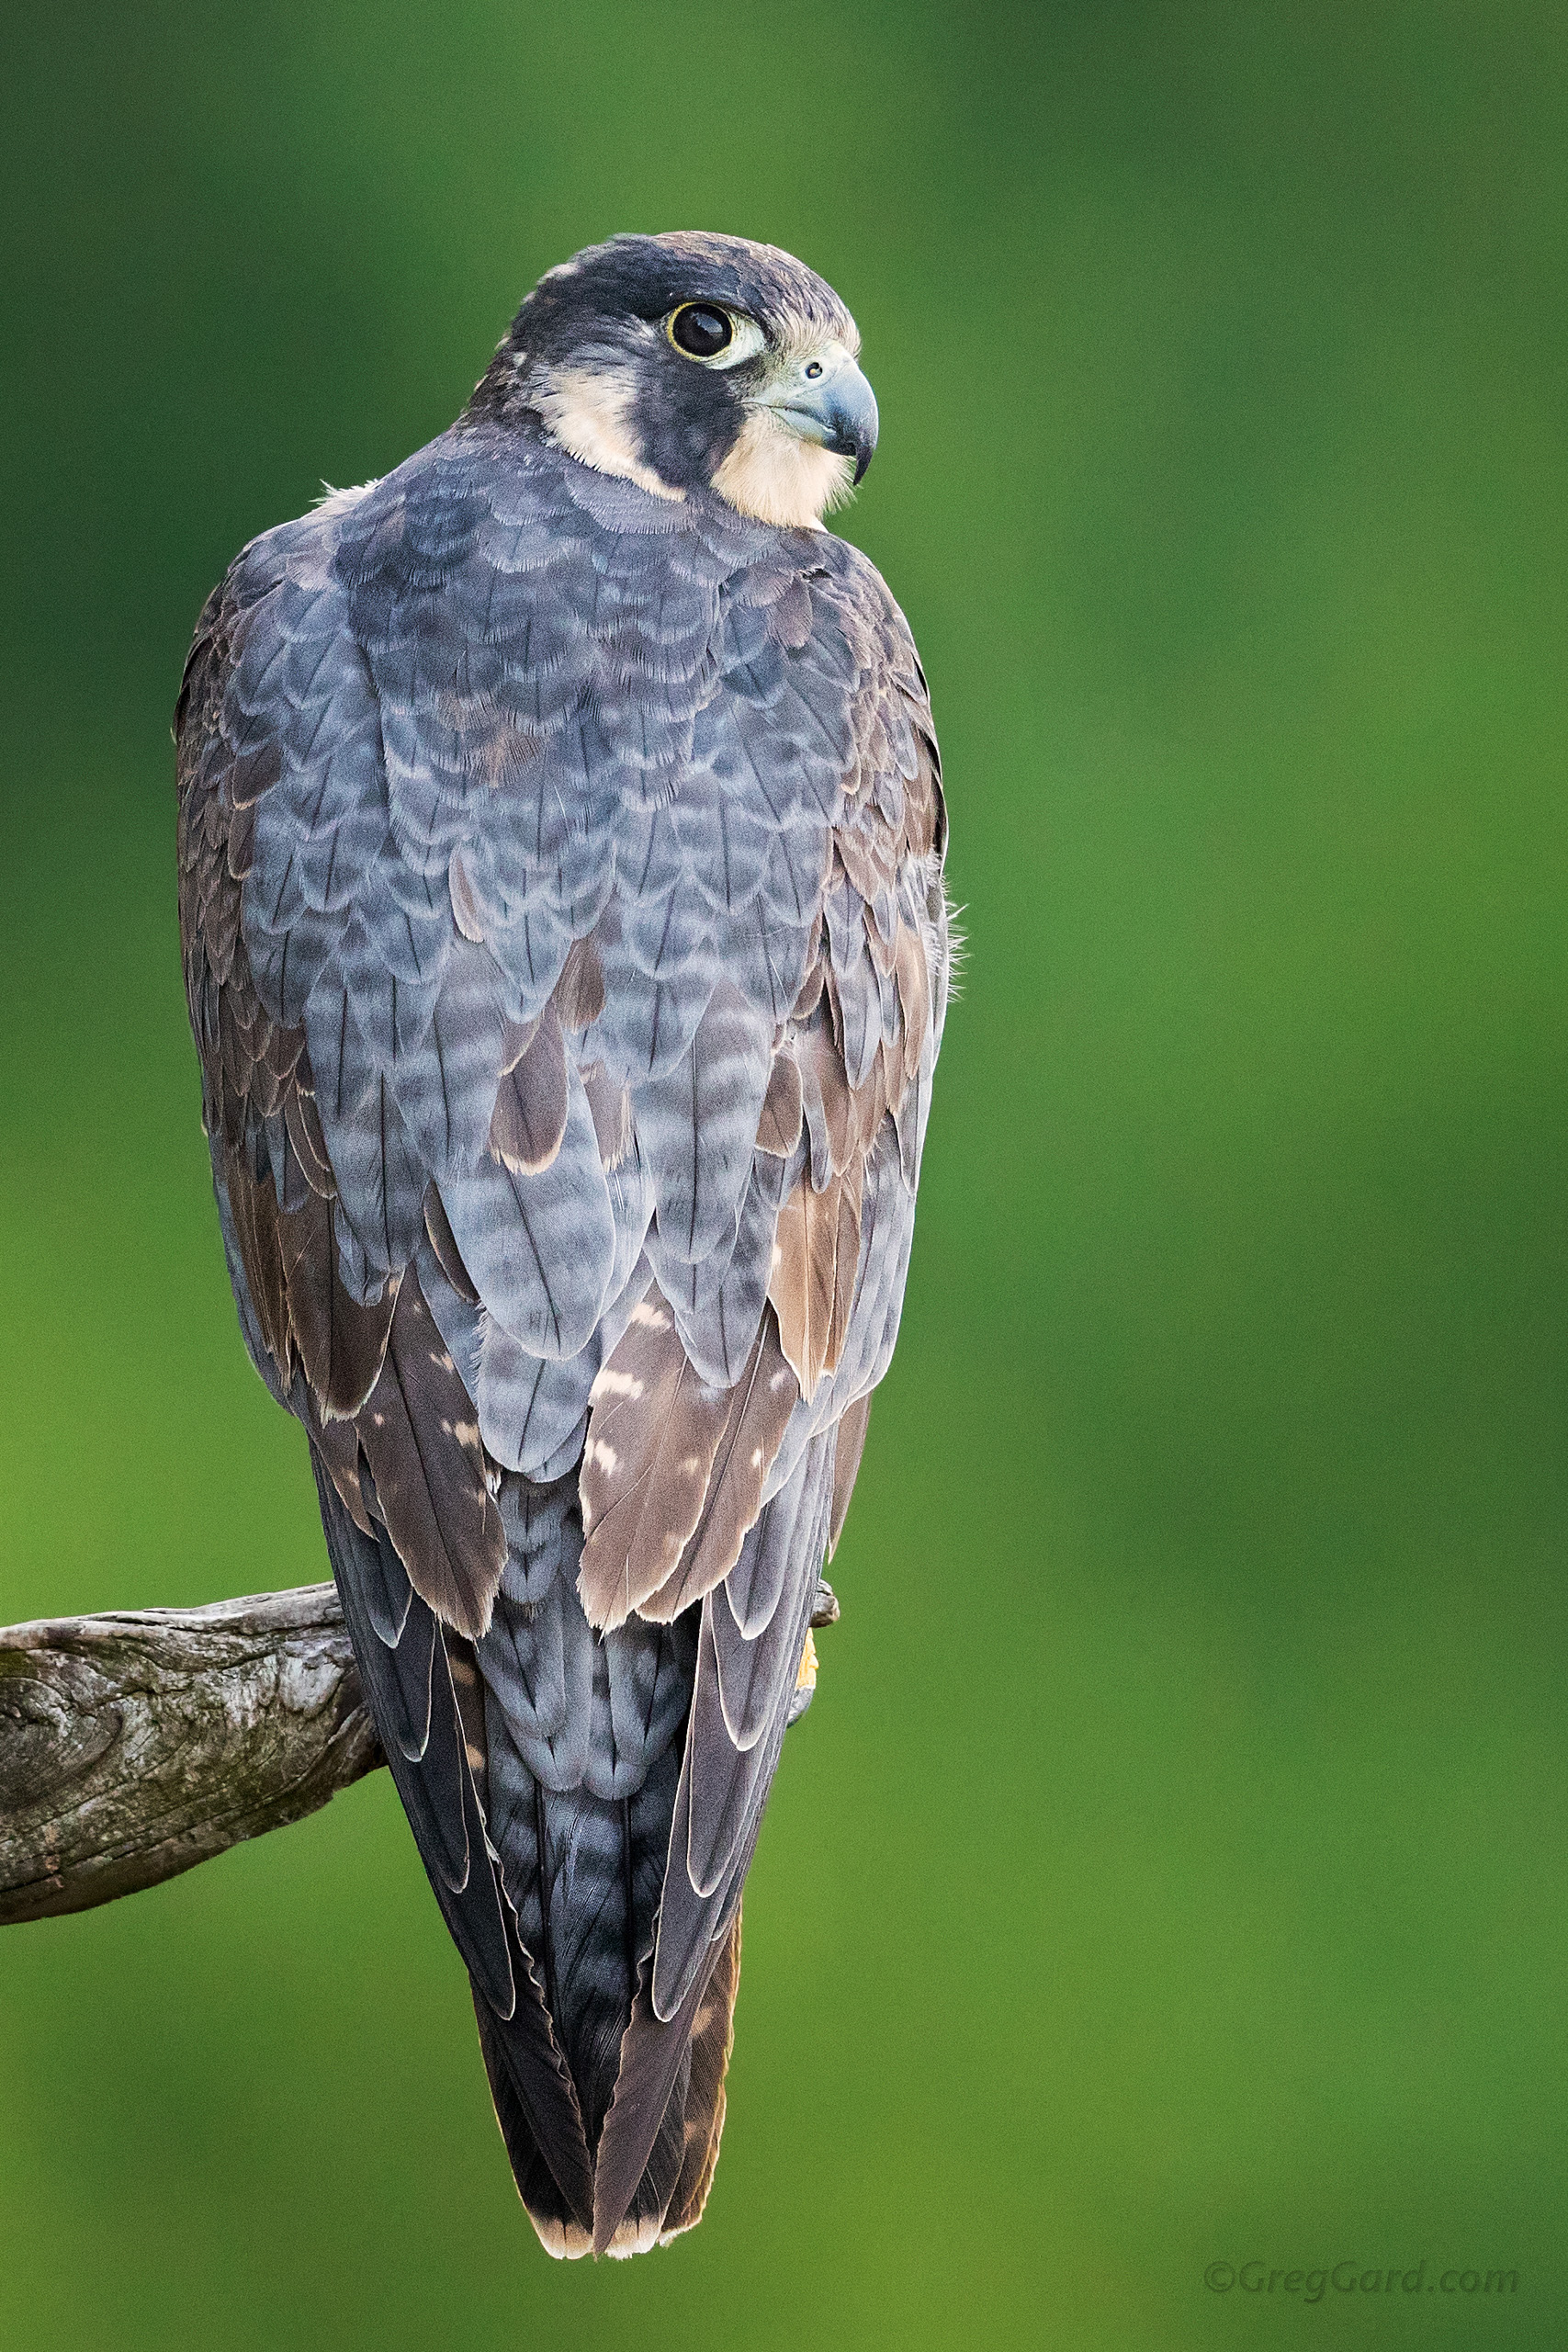 Juvenile Peregrine Falcon motling into adult plumage